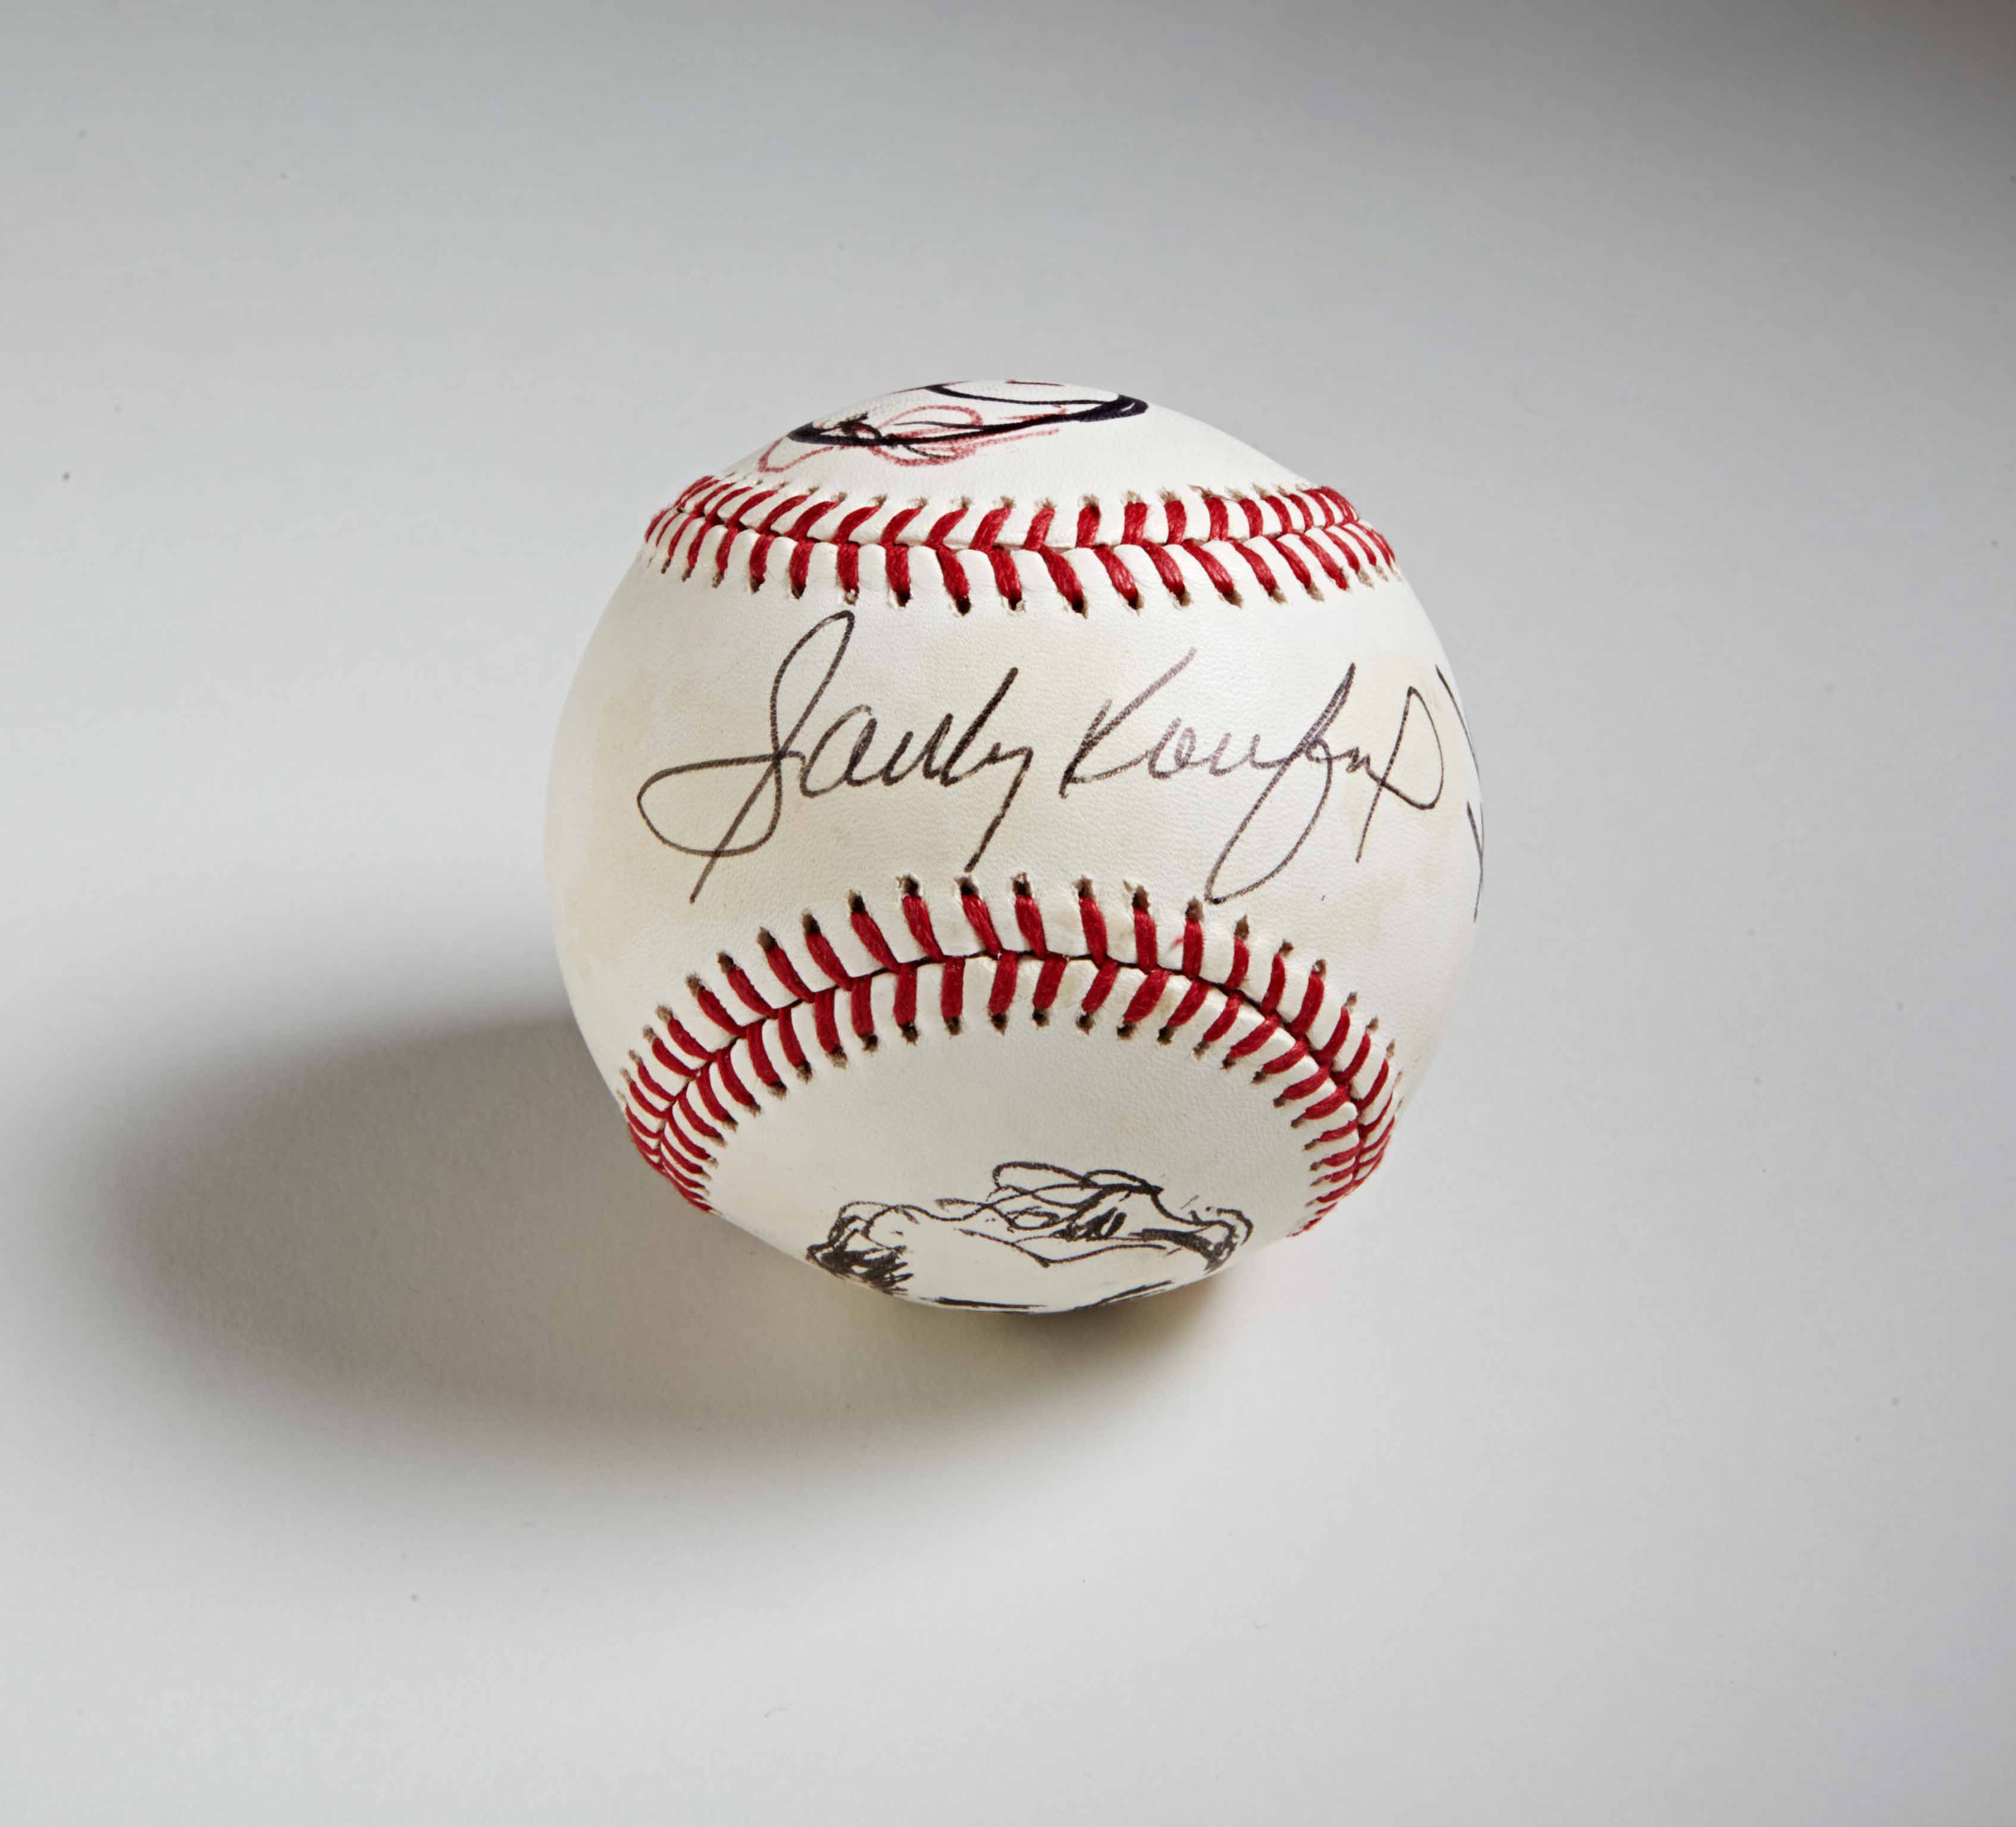 Collection - Jewish Baseball Museum